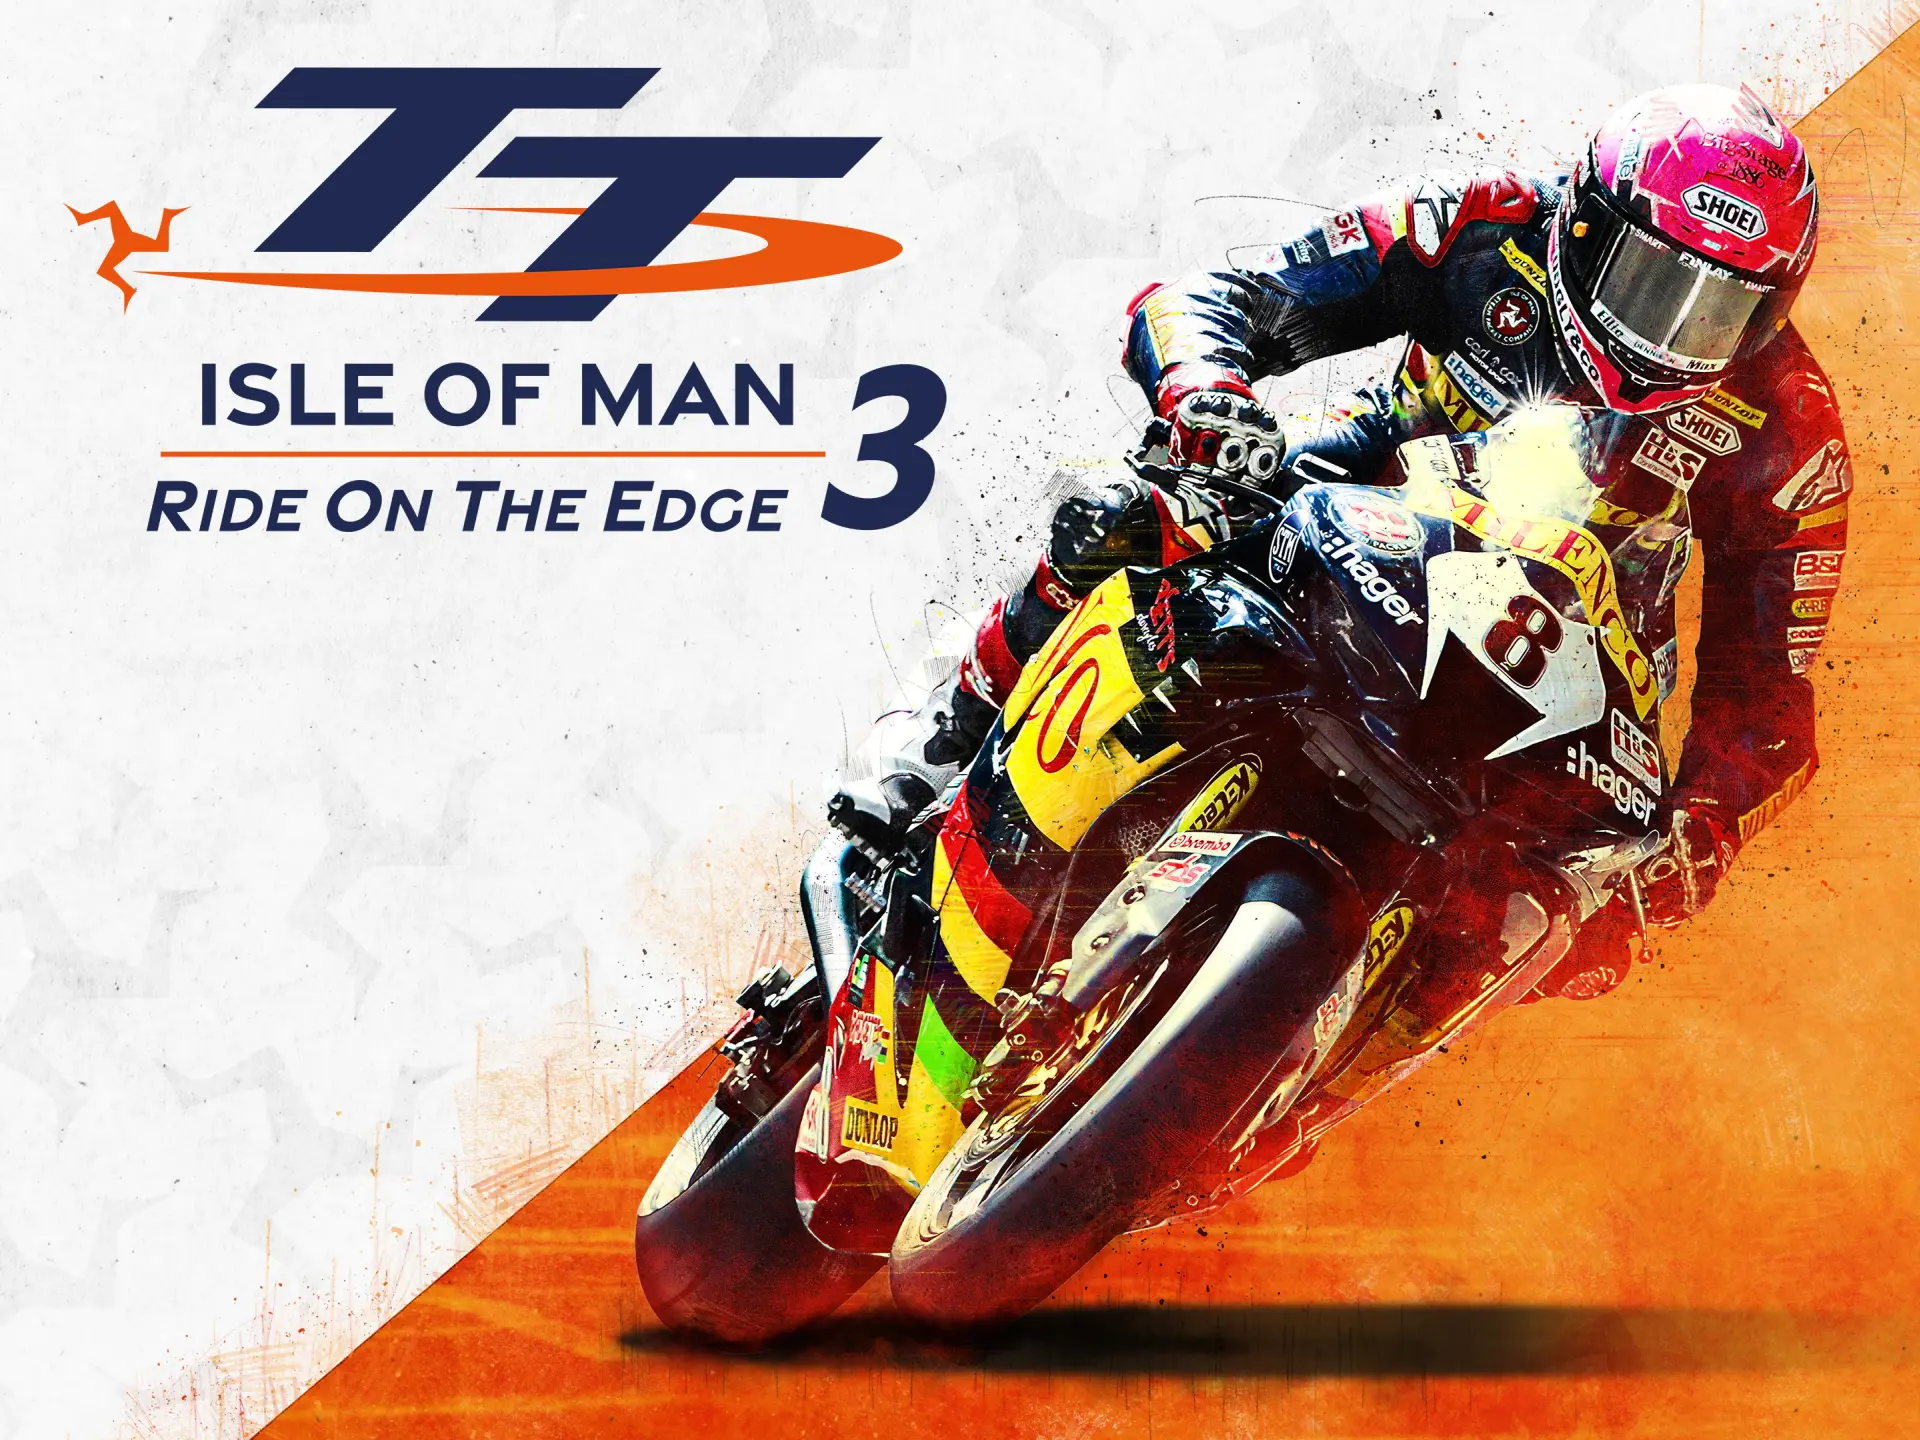 Video: TT Isle Of Man: Ride on the Edge 3